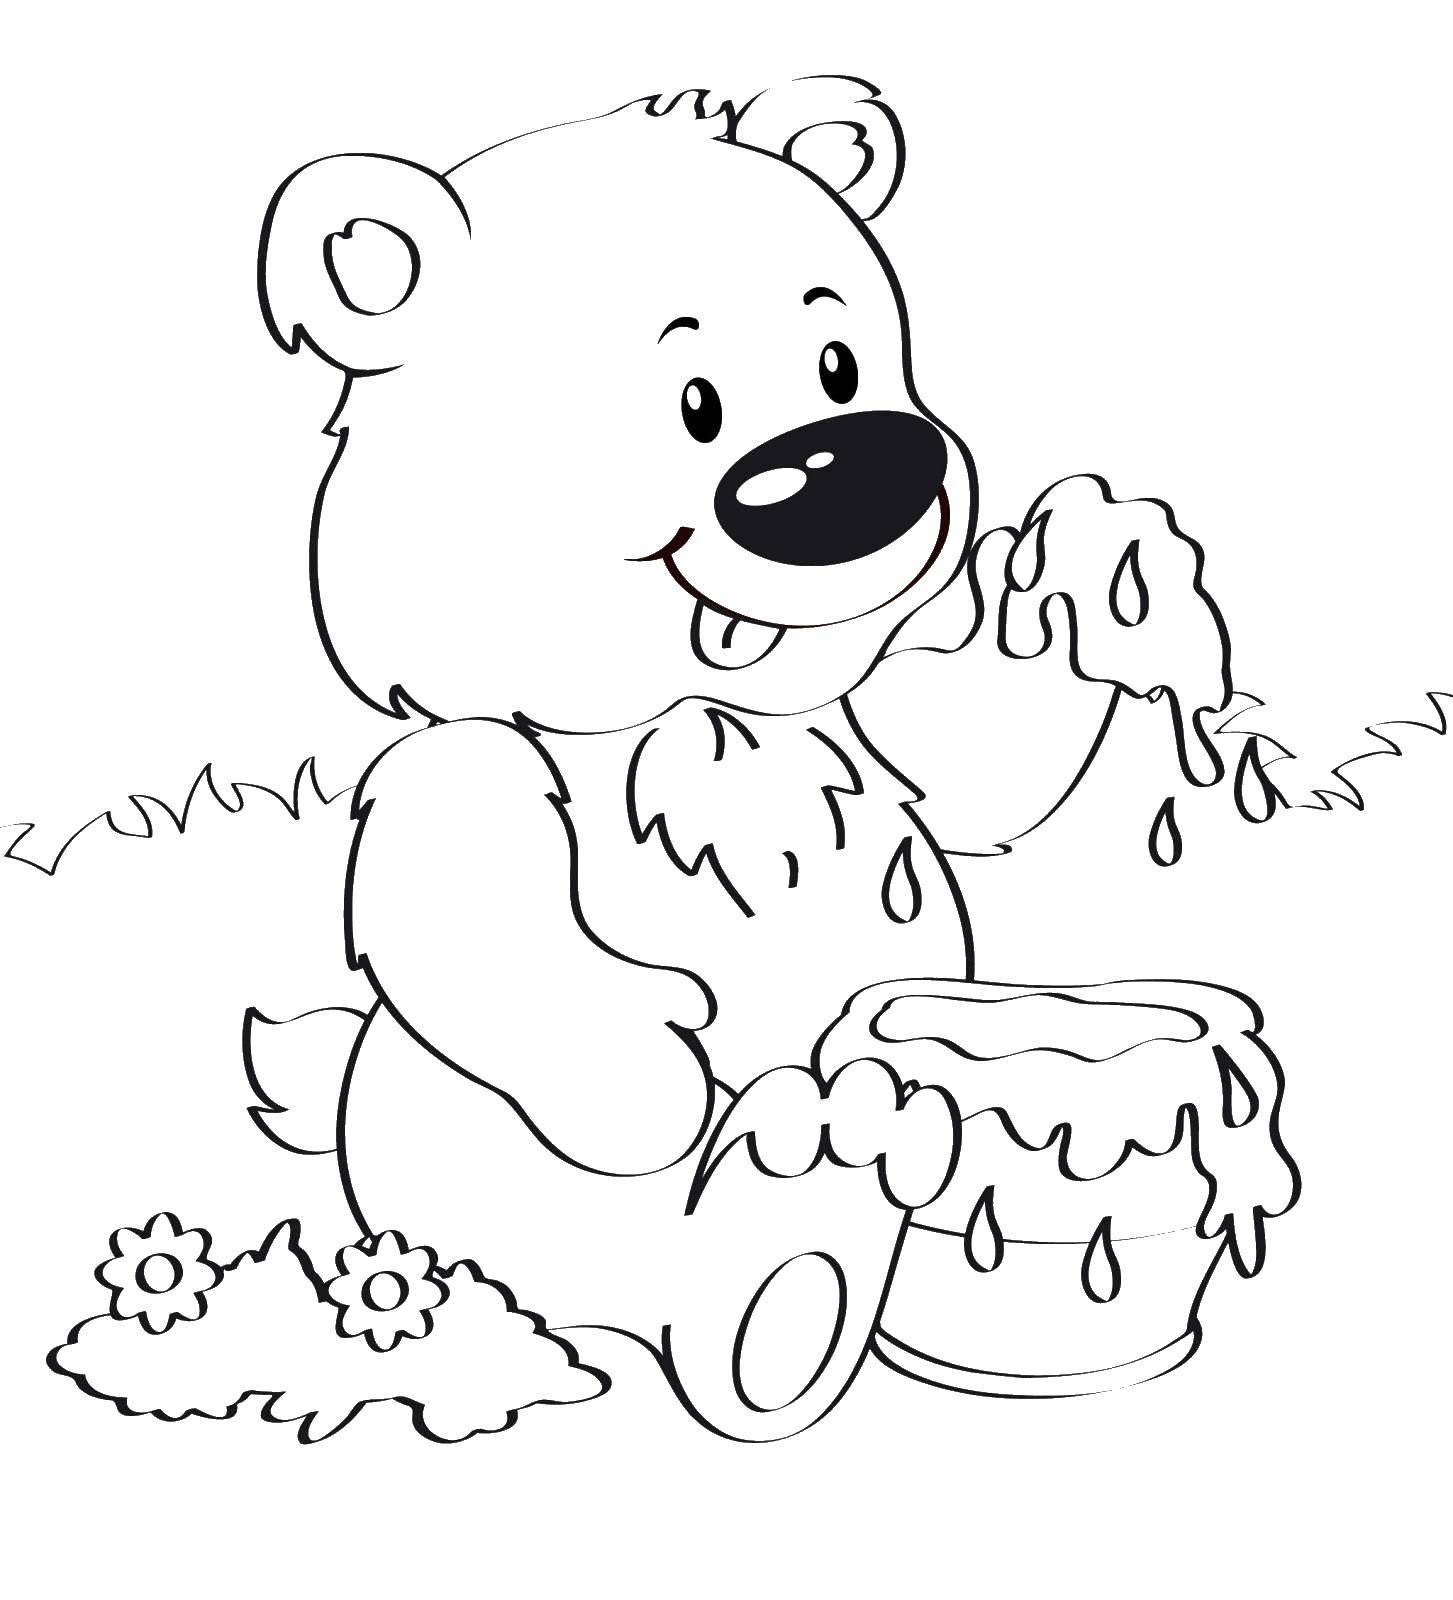 Медвежонок с банкой мёда (мёд)